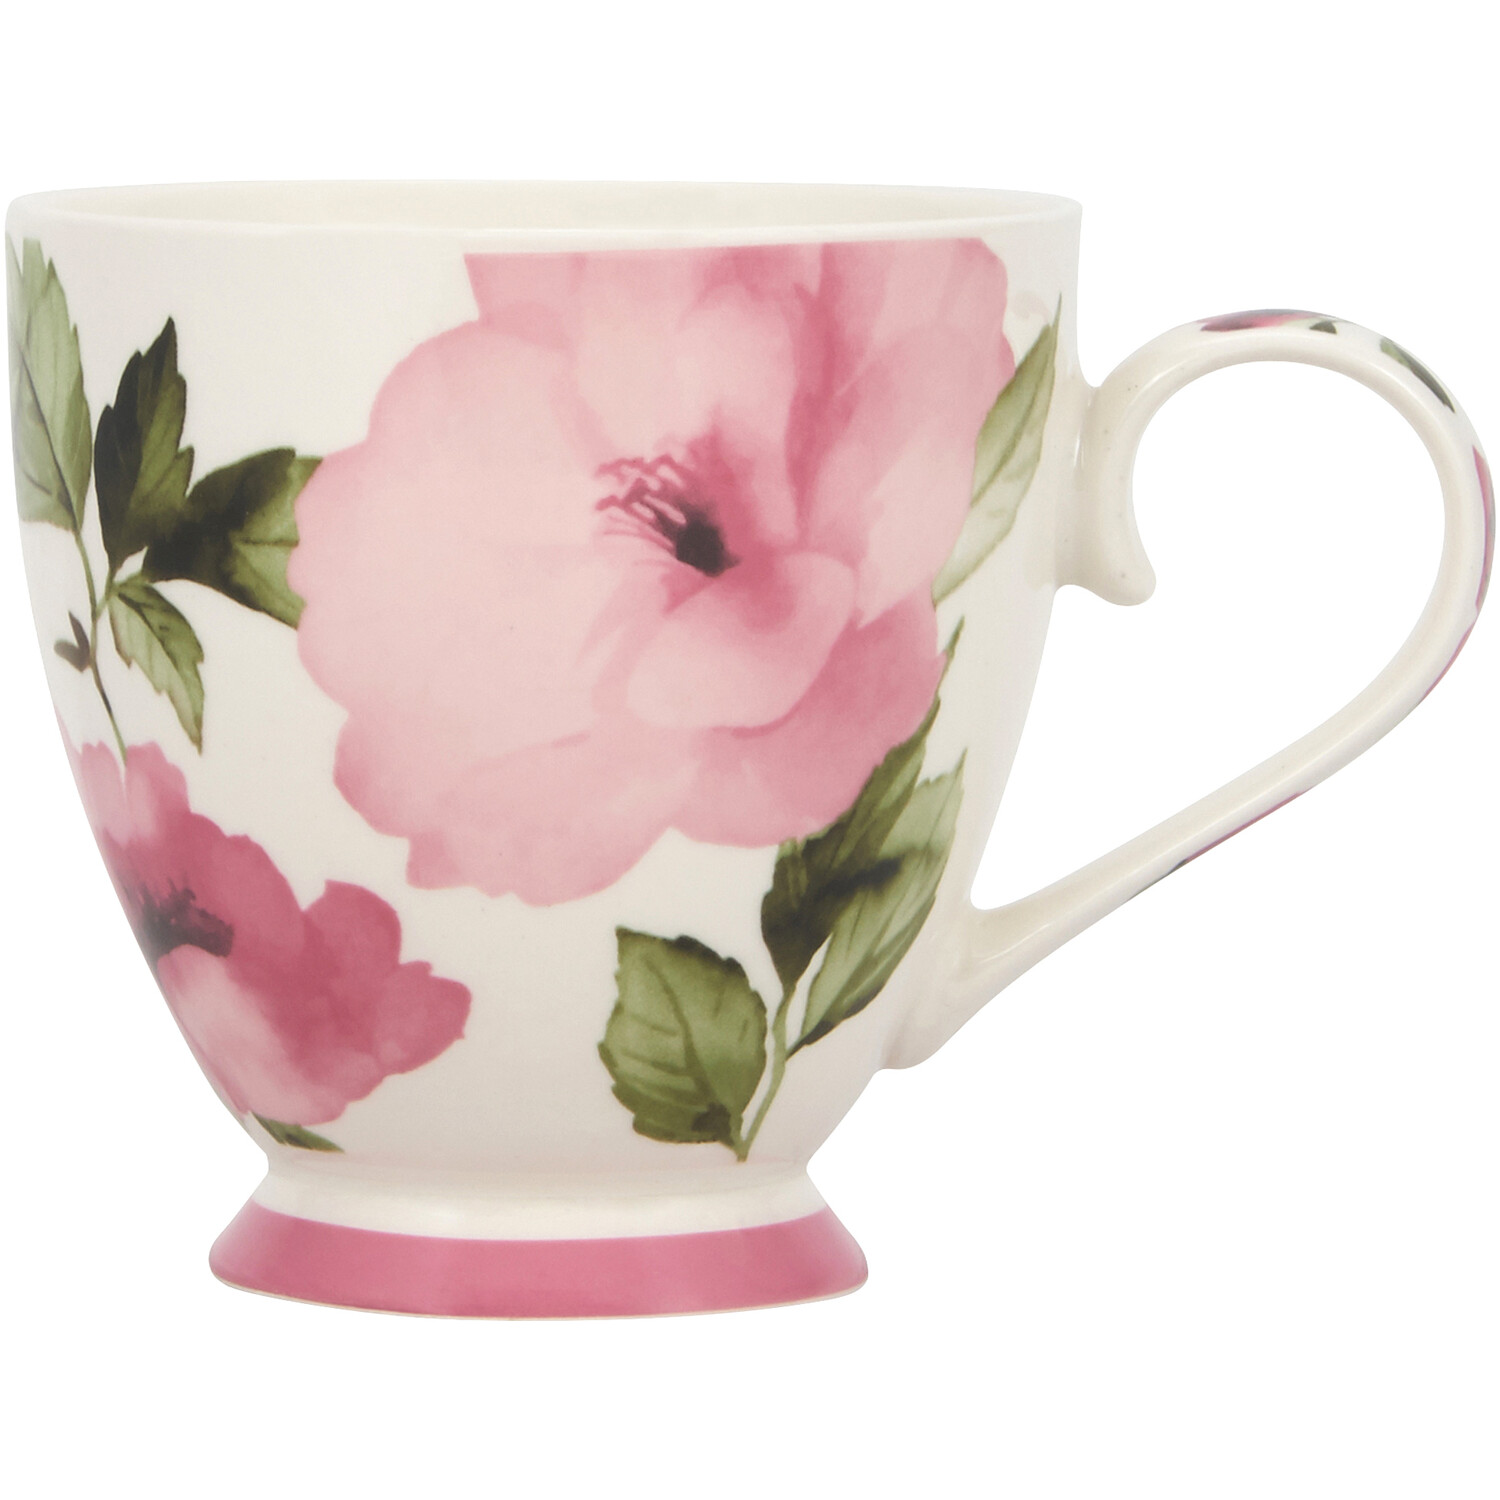 Flower Footed Mug - Pink Image 1